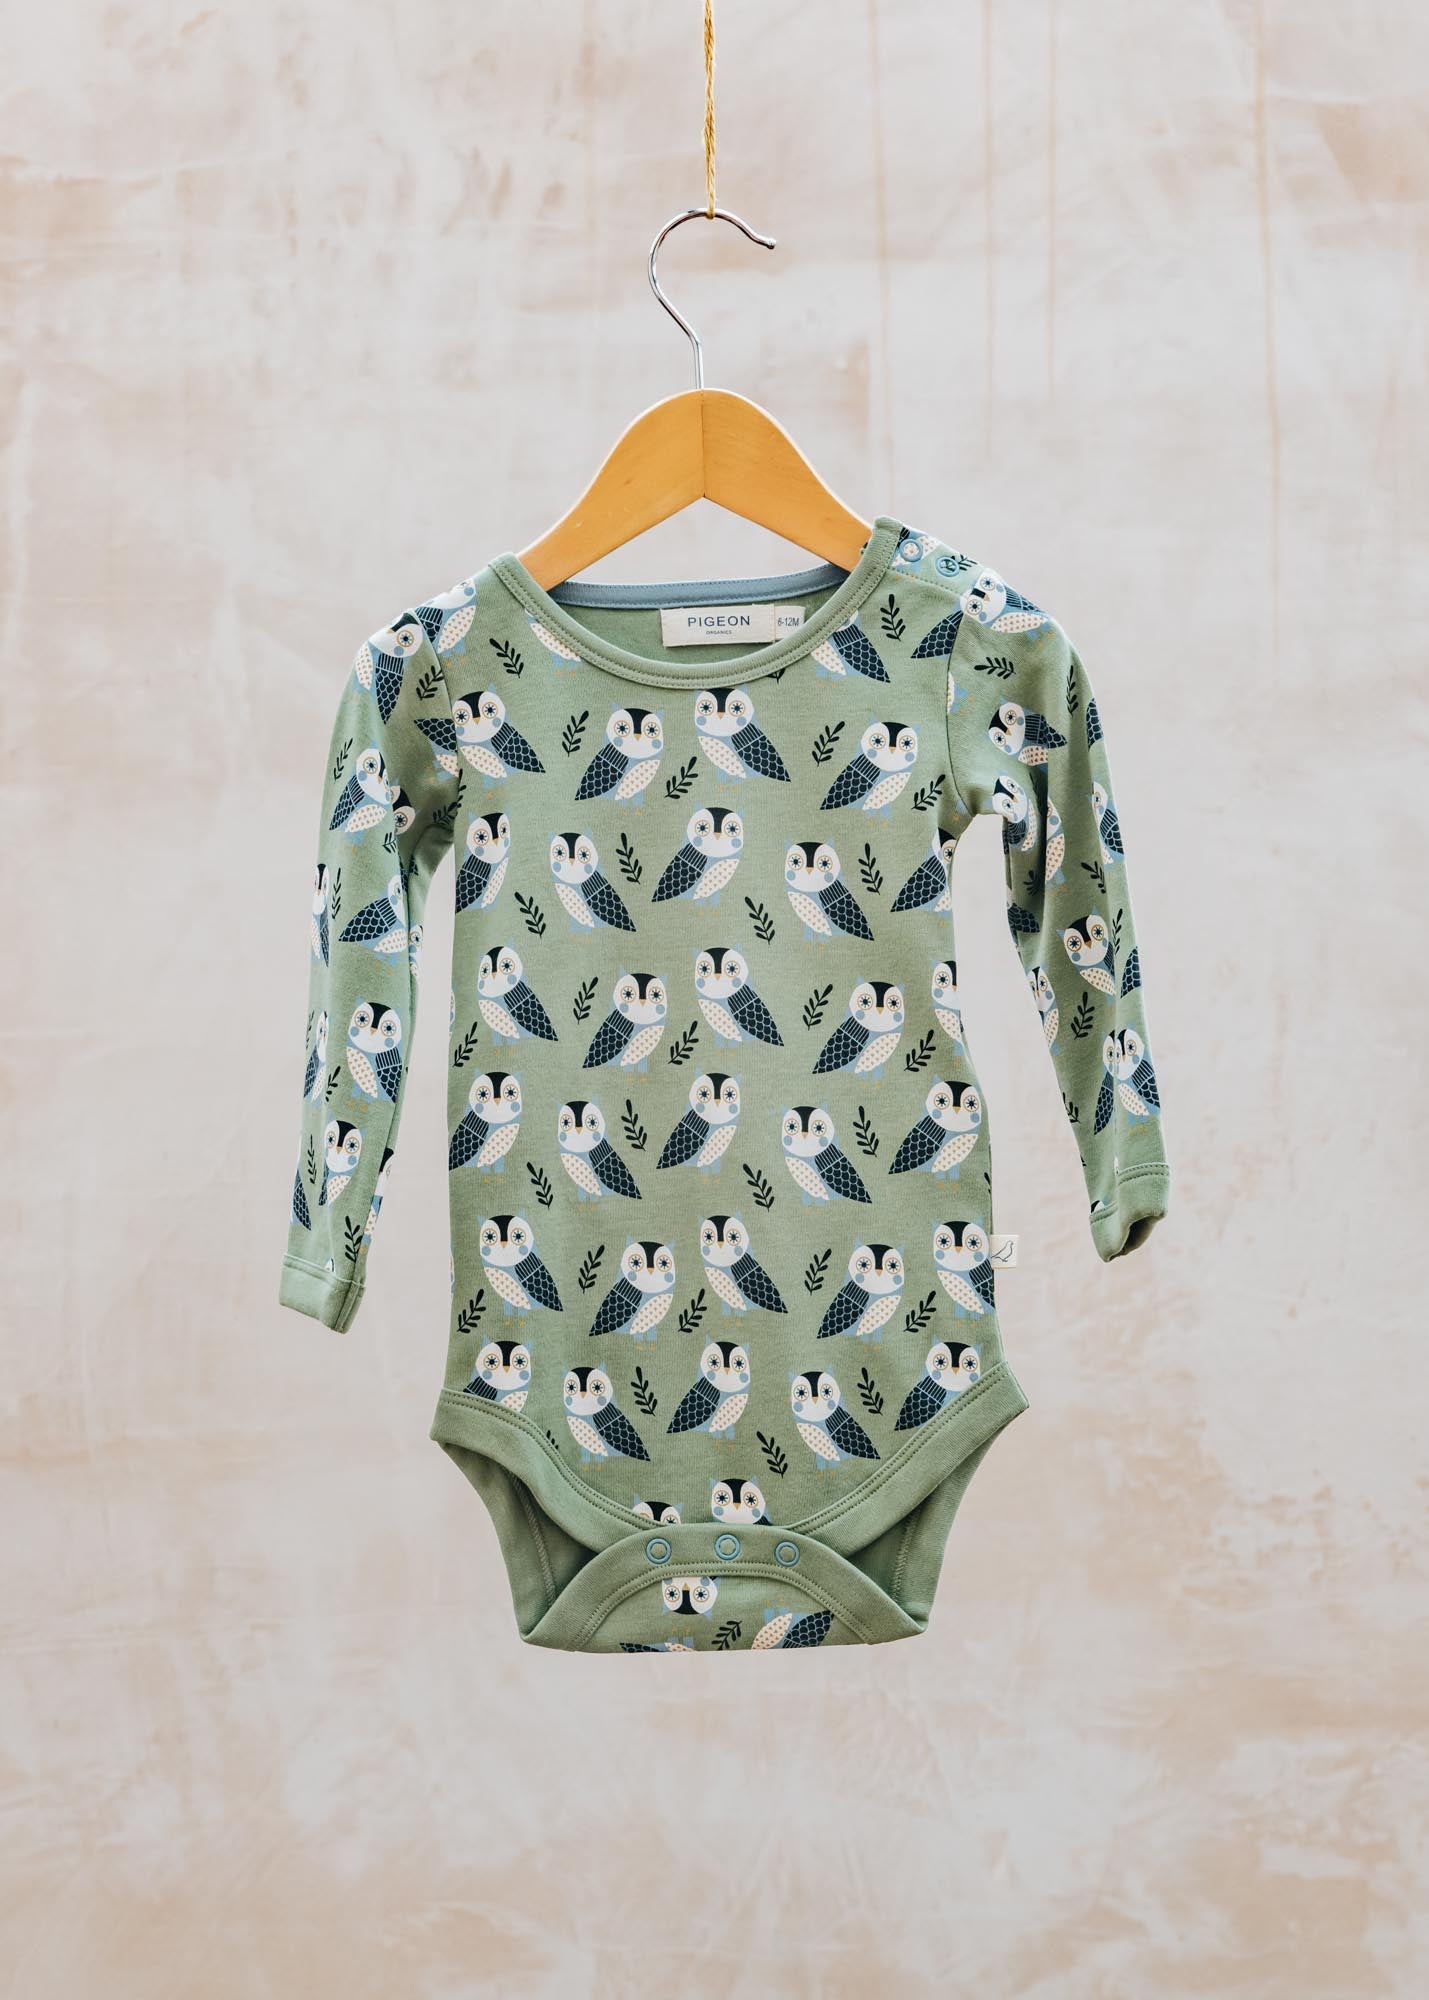 Pigeon Organics Babies' Bodysuit in Green with Owls